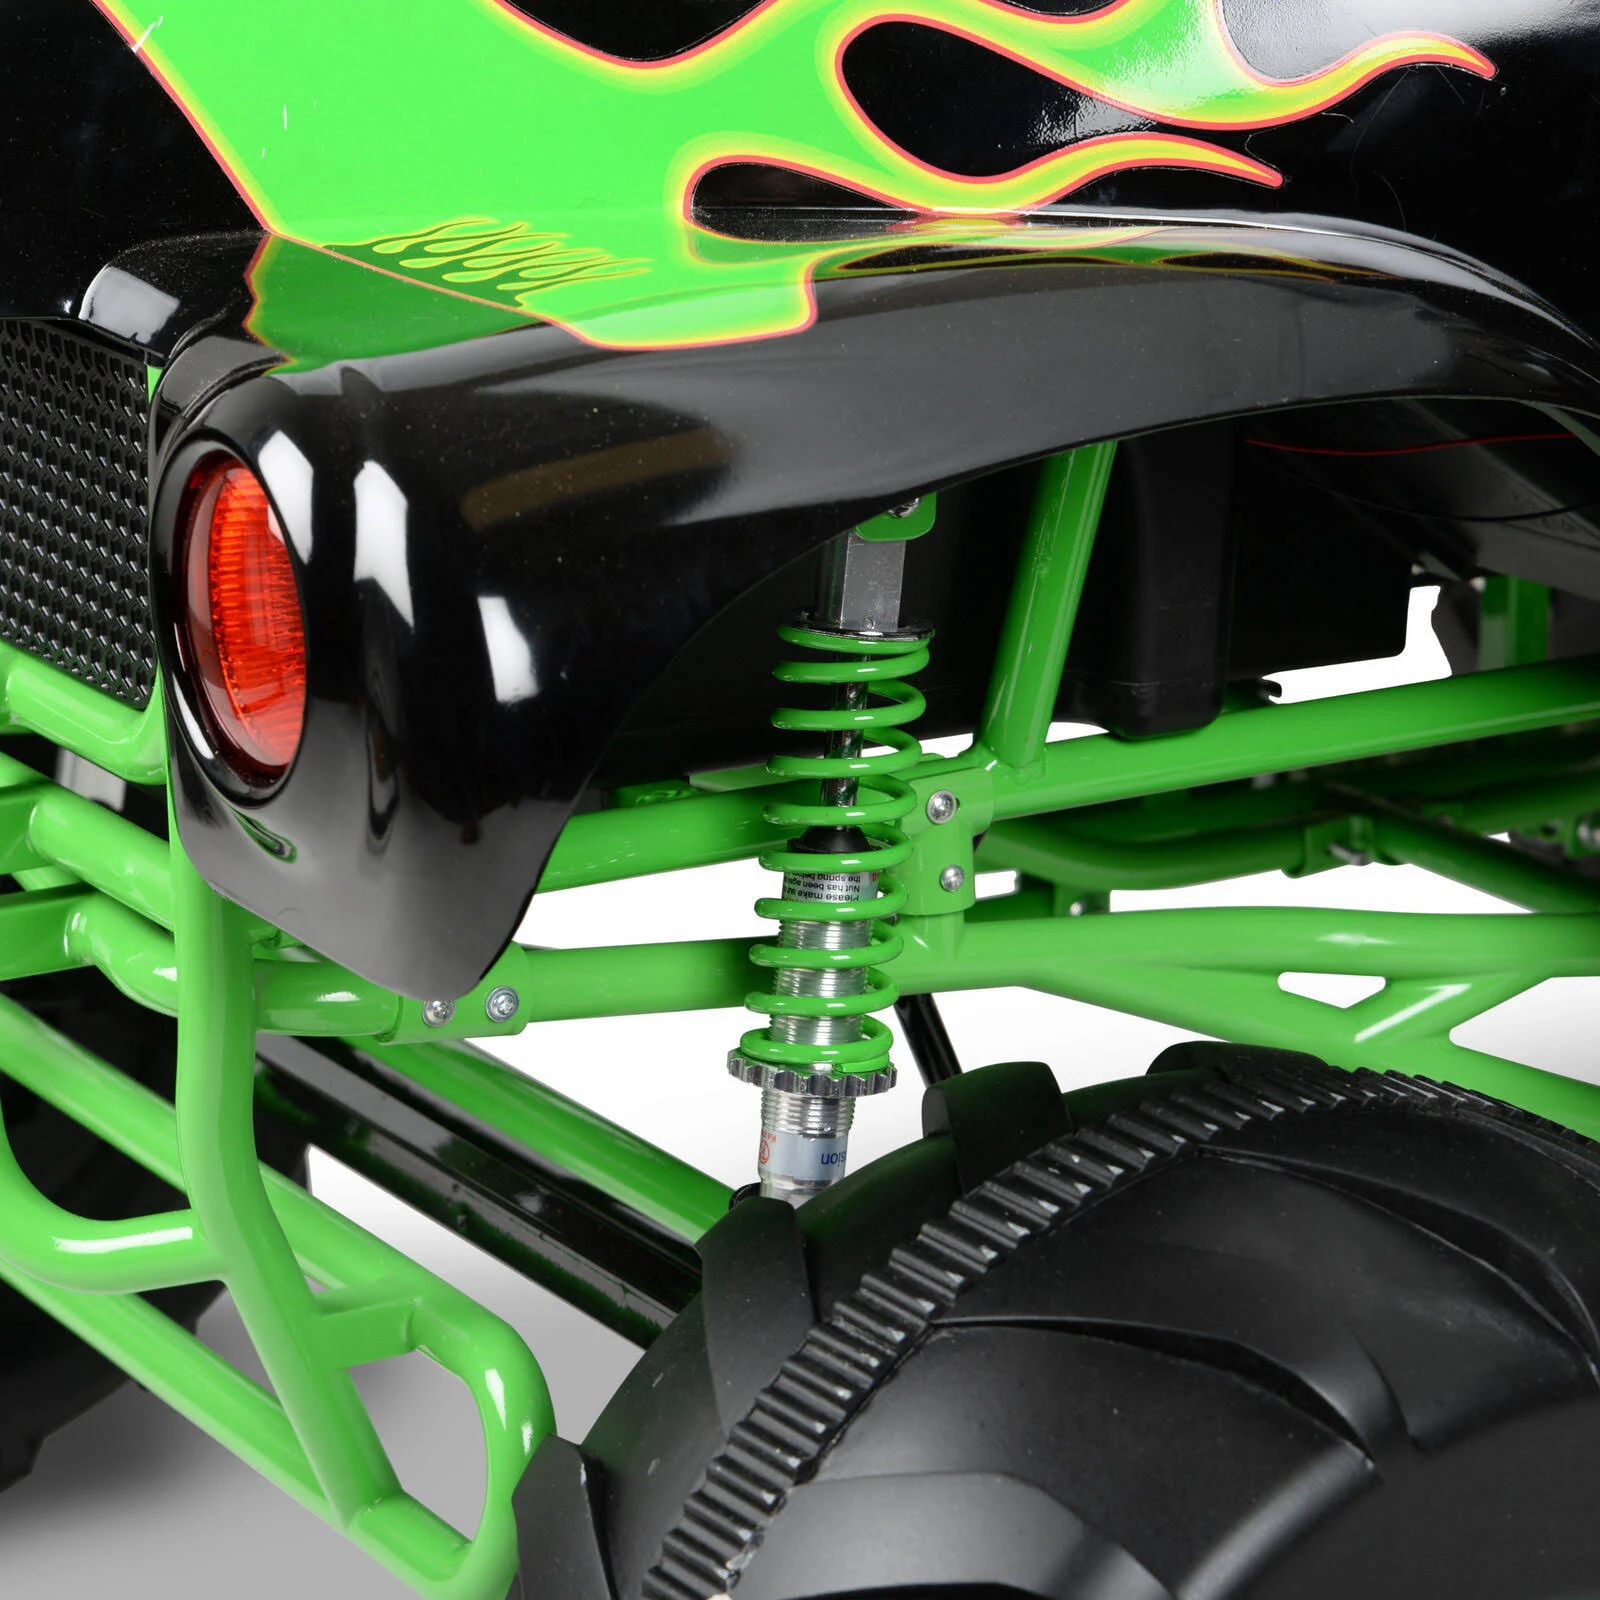 Monster Jam Grave Digger 24-Volt Battery Powered Ride-On